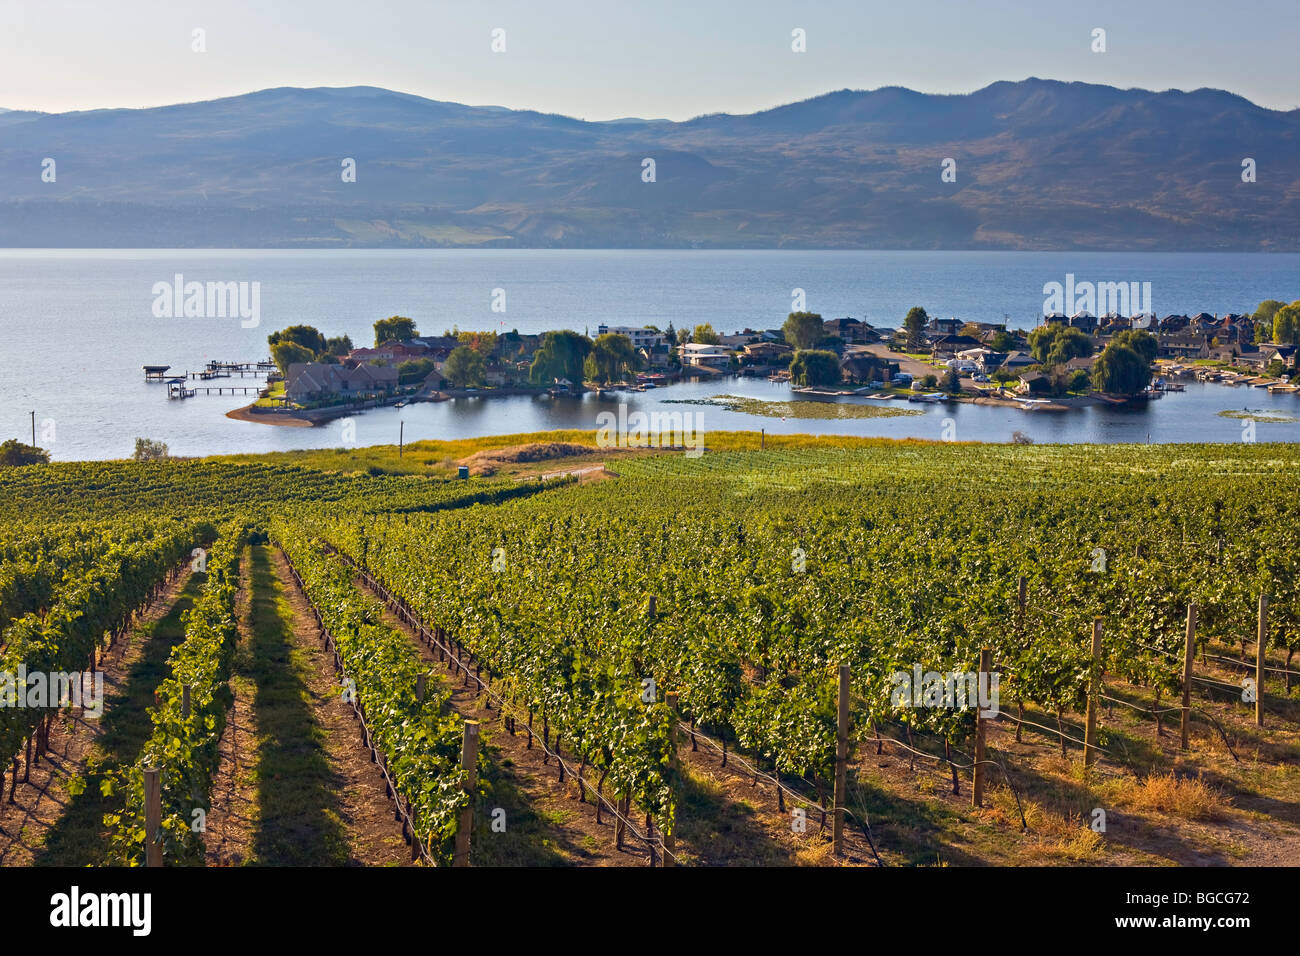 Rows of grapevines growing at a vineyard in Westbank, West Kelowna on the shores of Okanagan Lake, Okanagan, British Columbia, C Stock Photo